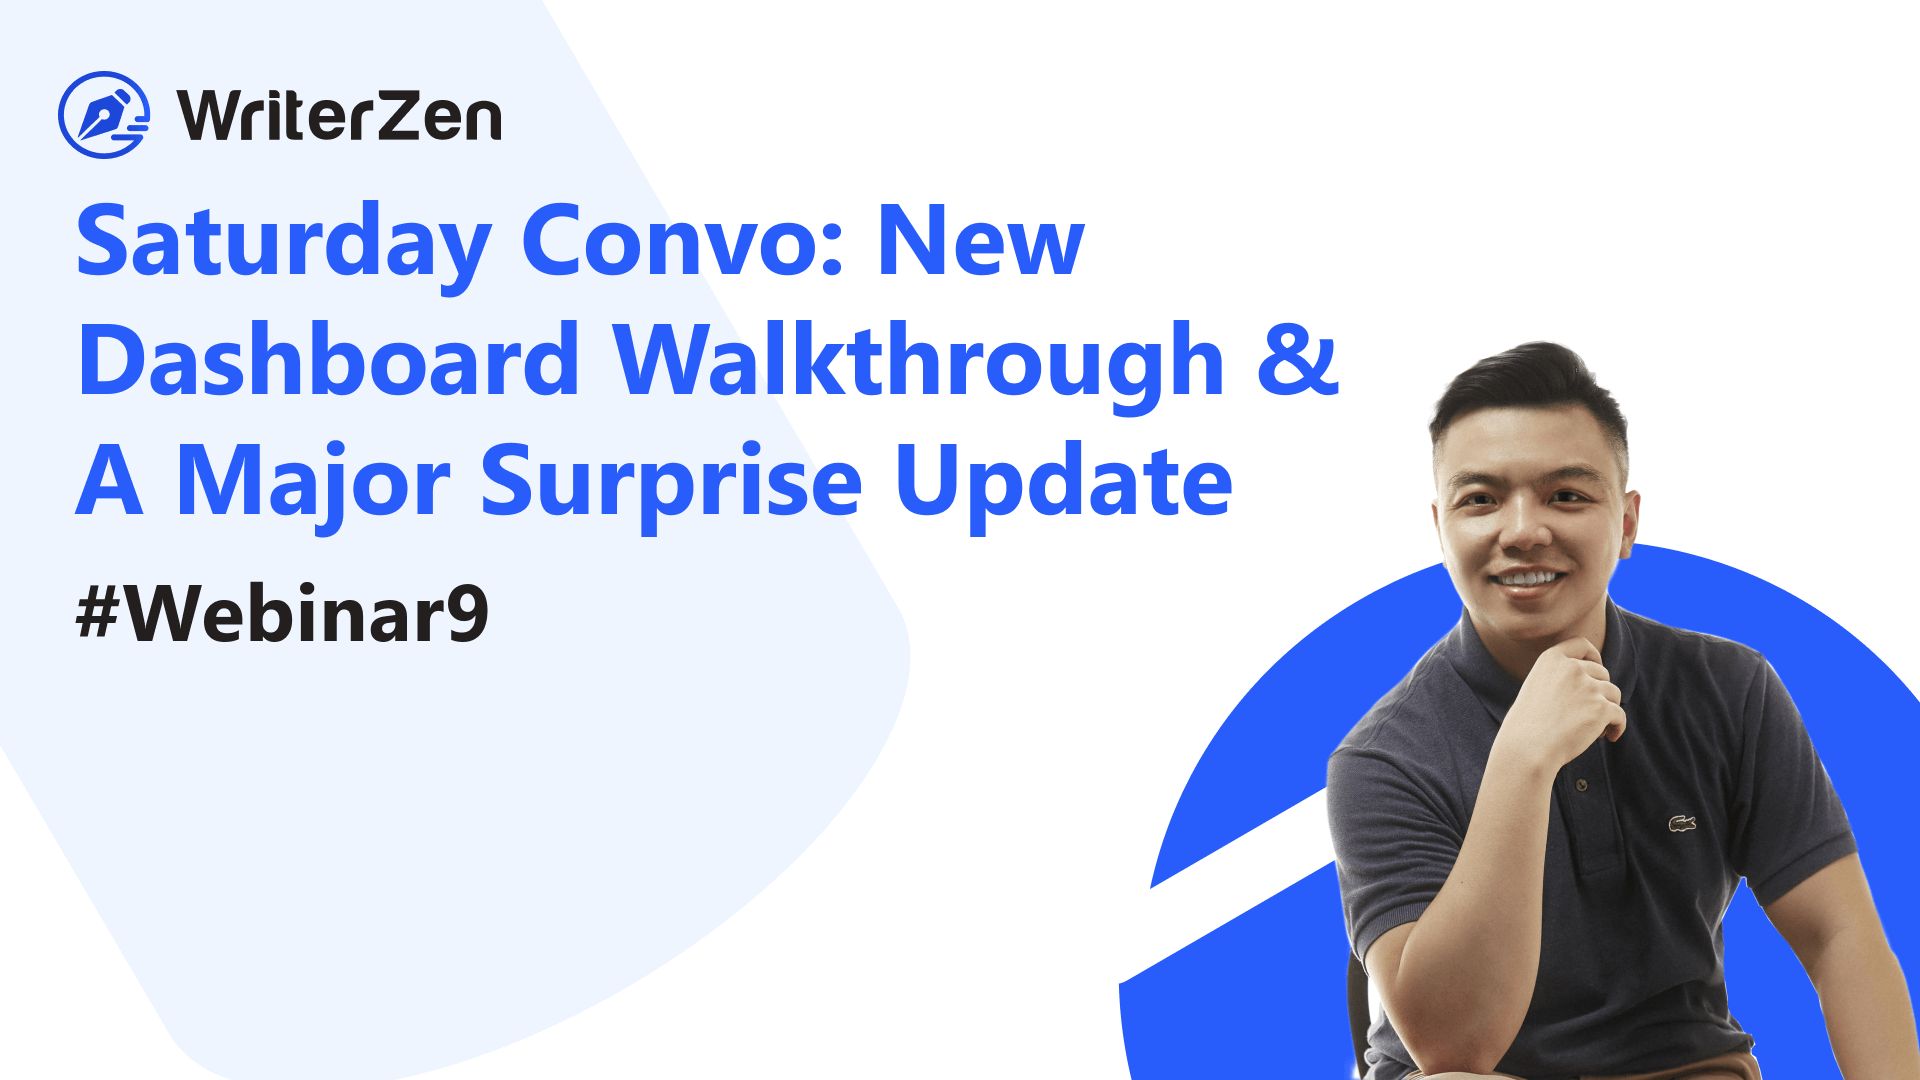 Saturday Convo: New Dashboard Walkthrough & A Major Surprise Update